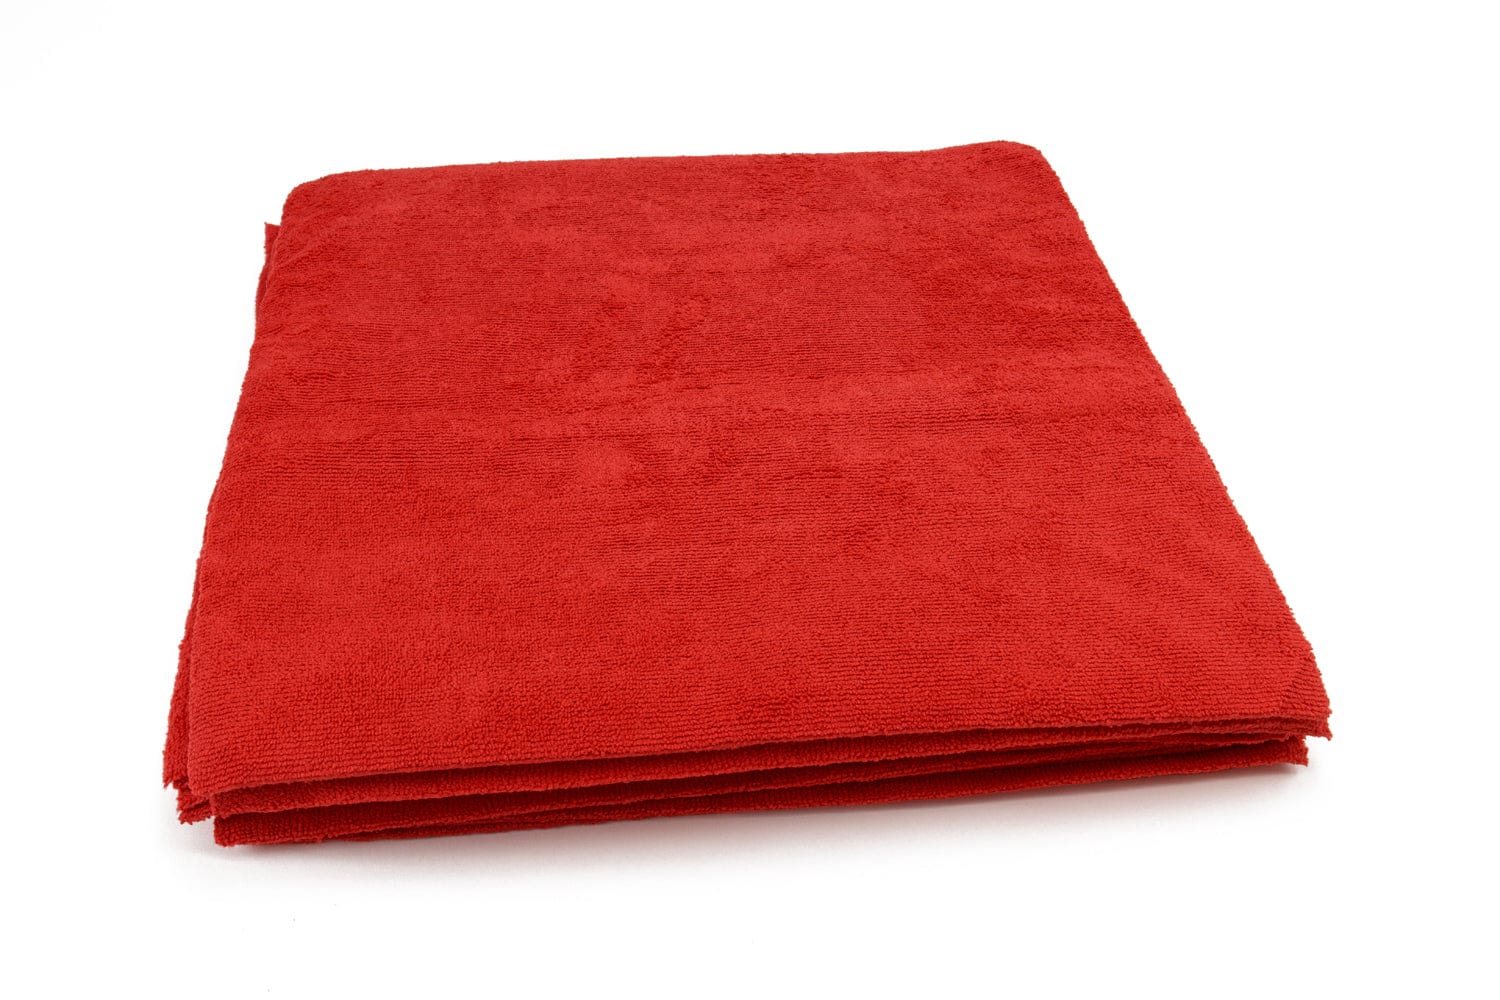 Autofiber Towel Red [Utility 400v] Edgeless Microfiber Cleaning Towel 16"x16" - 20/Vacuum Pack